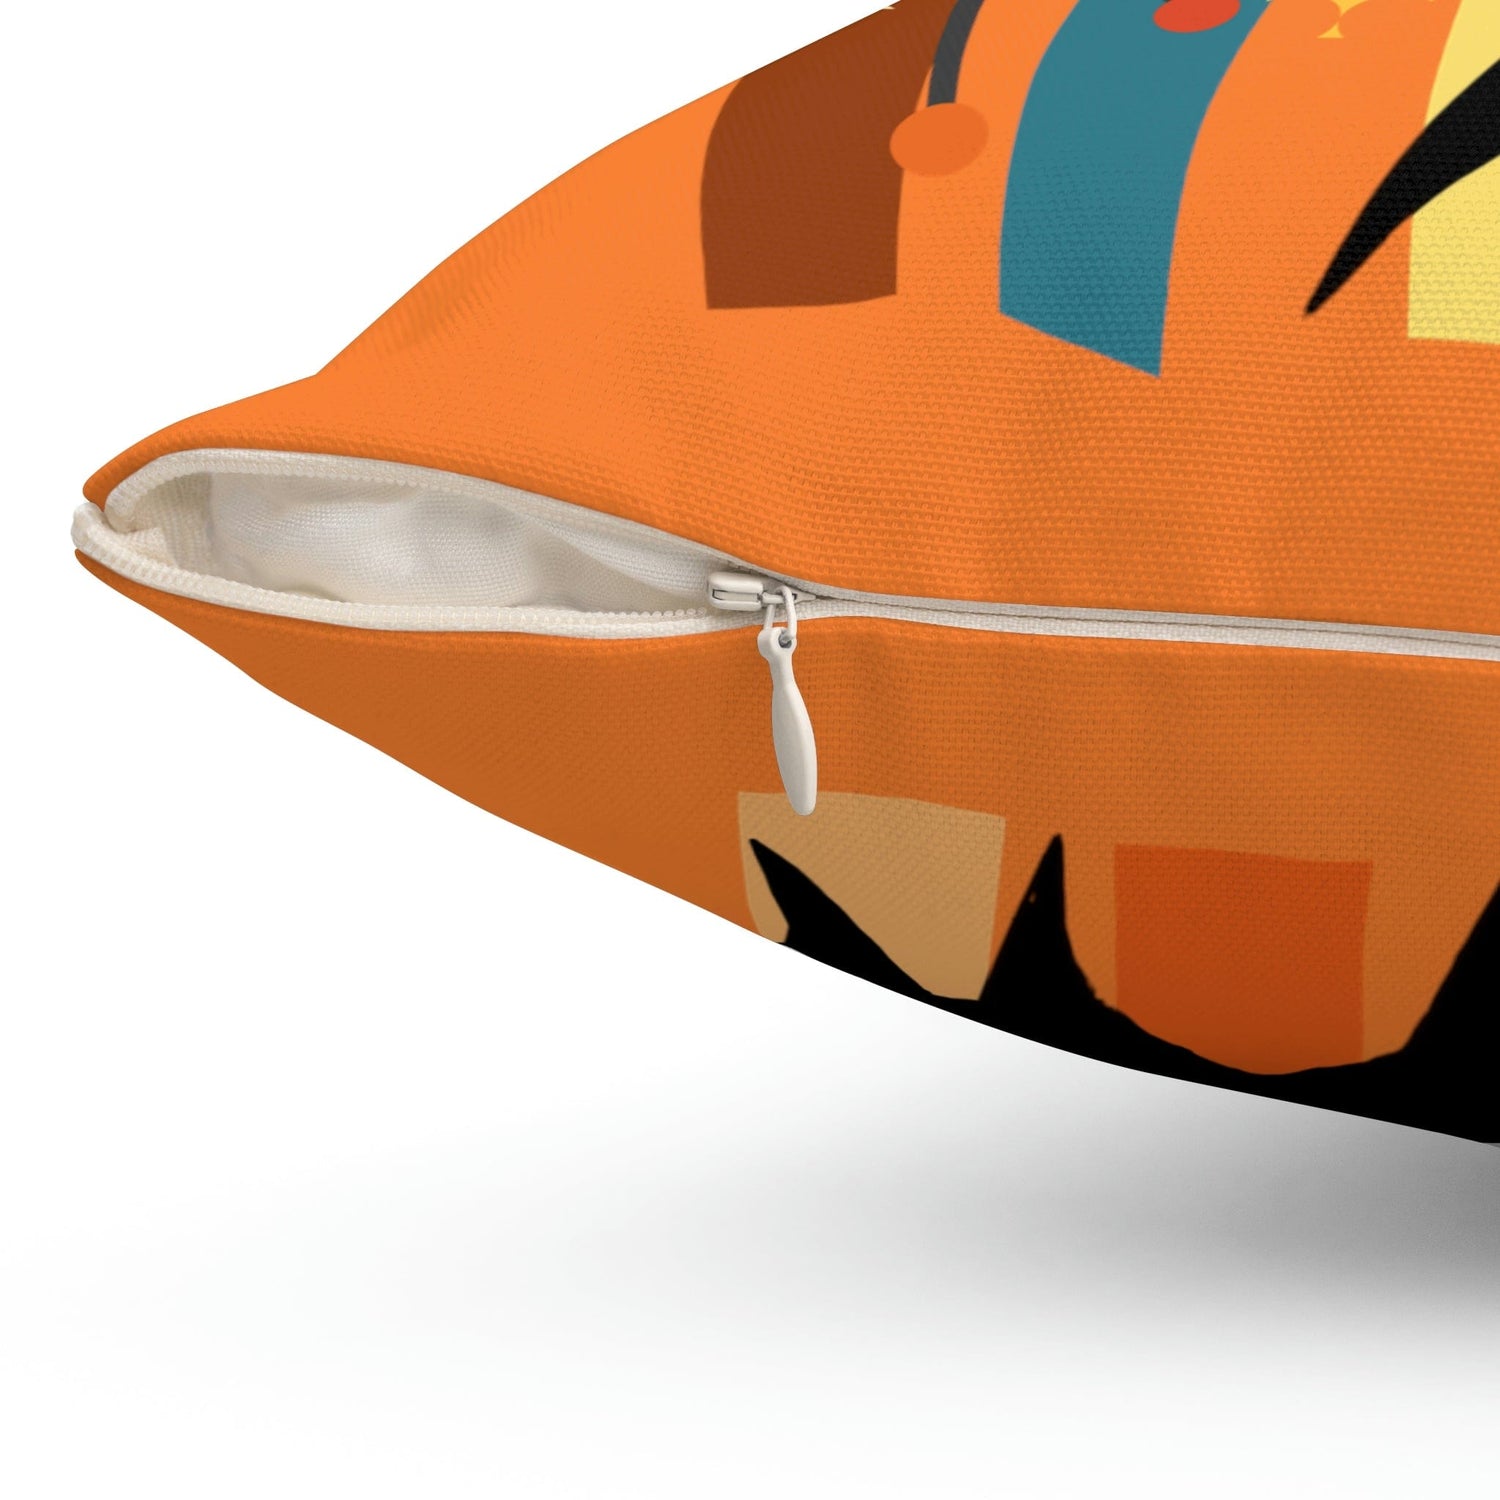 Atomic Cat, Retro Orange, Geometric, Starburst, MCM Black Cat Lover Gift Pillow Cover Home Decor